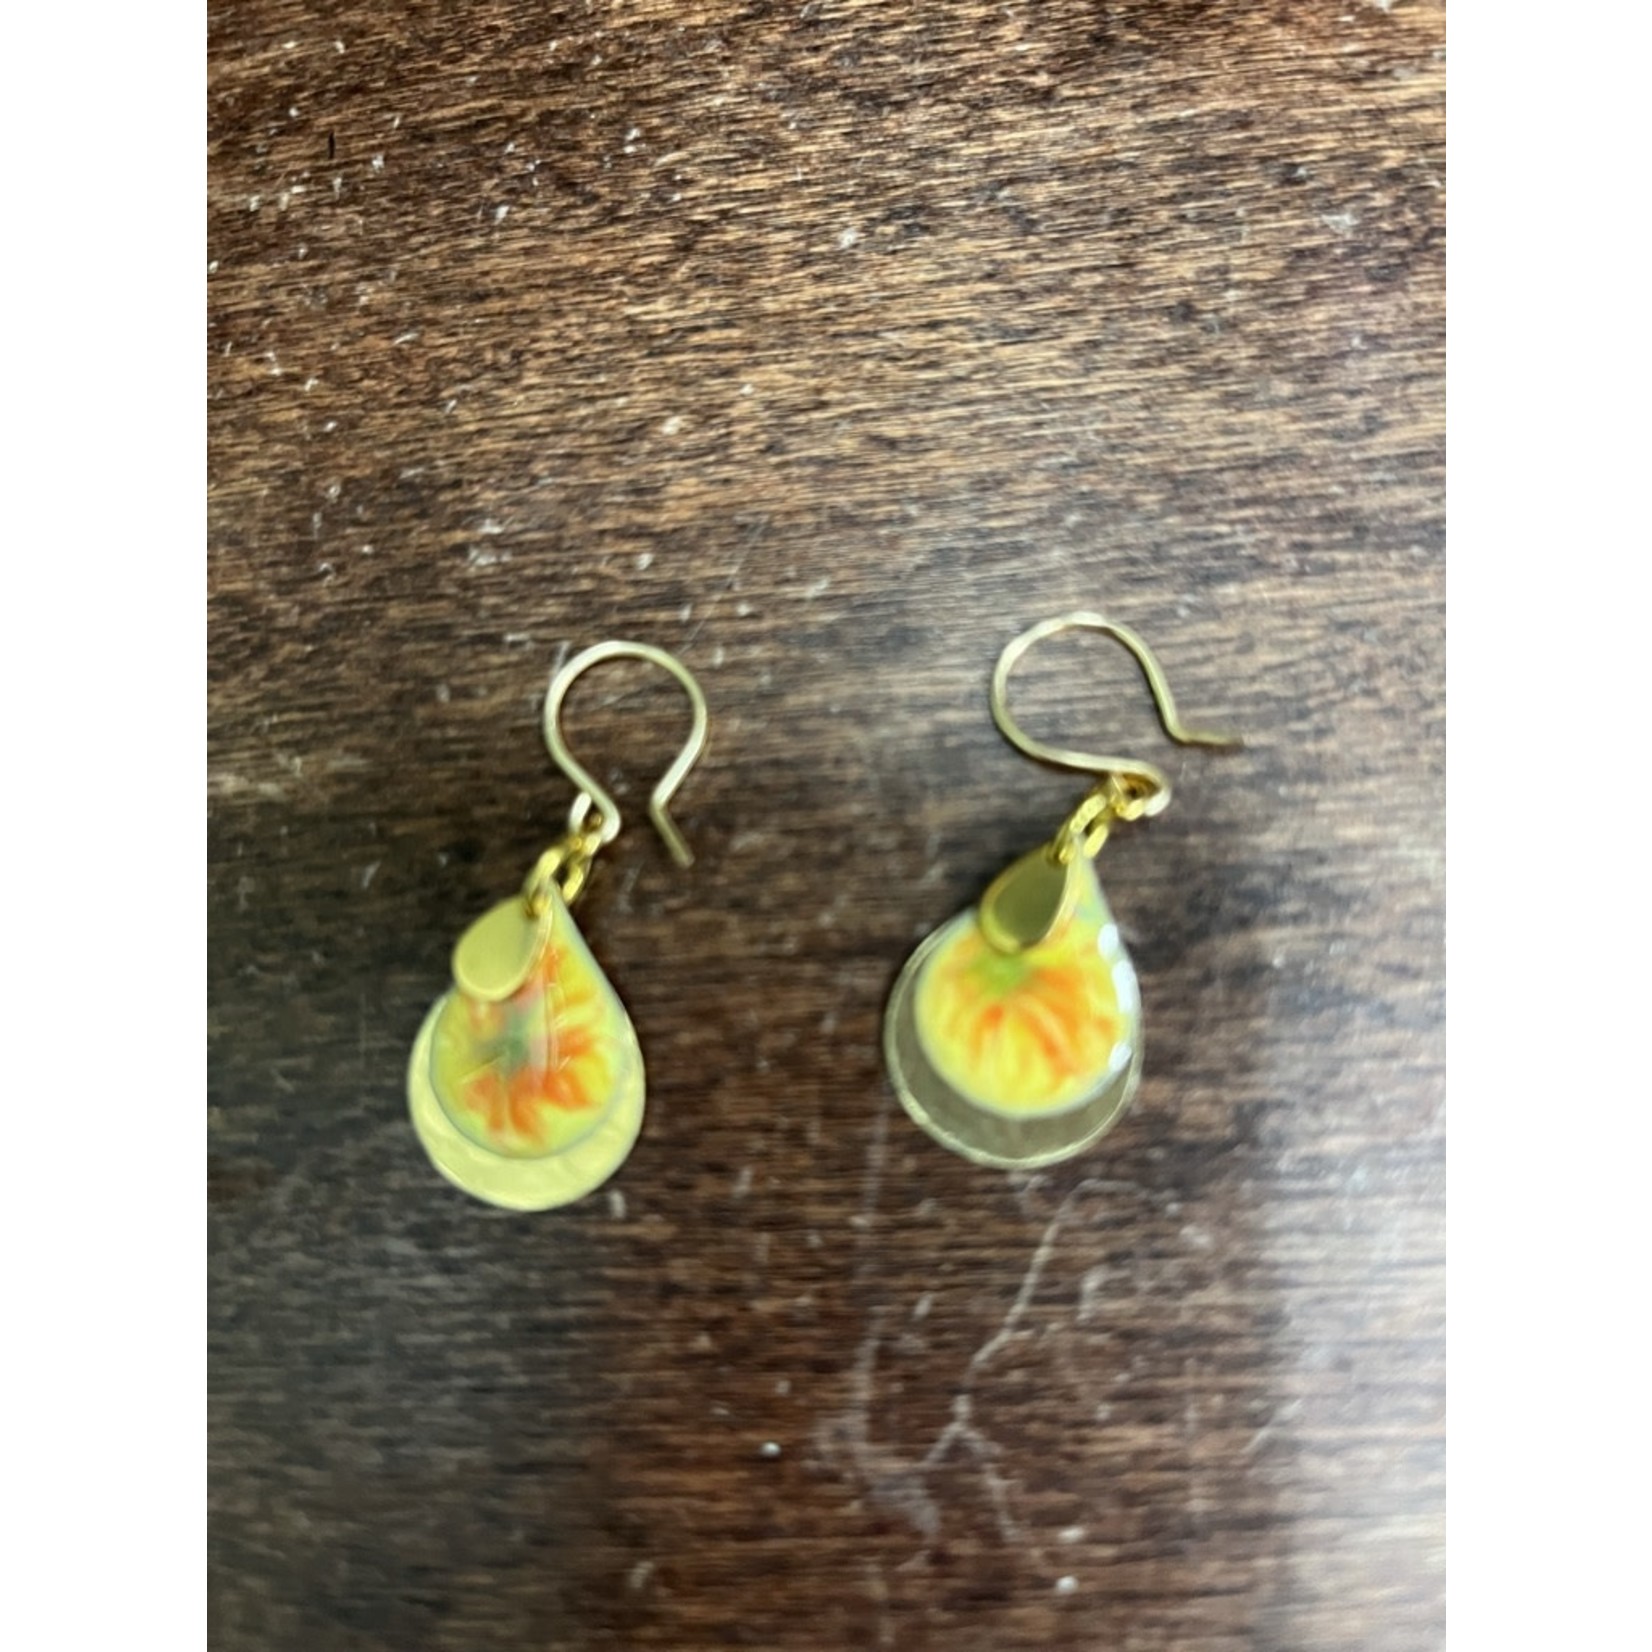 Colleen Hirsh Colleen Hirsh #408 gold/yellow/orange metal and resin earrings